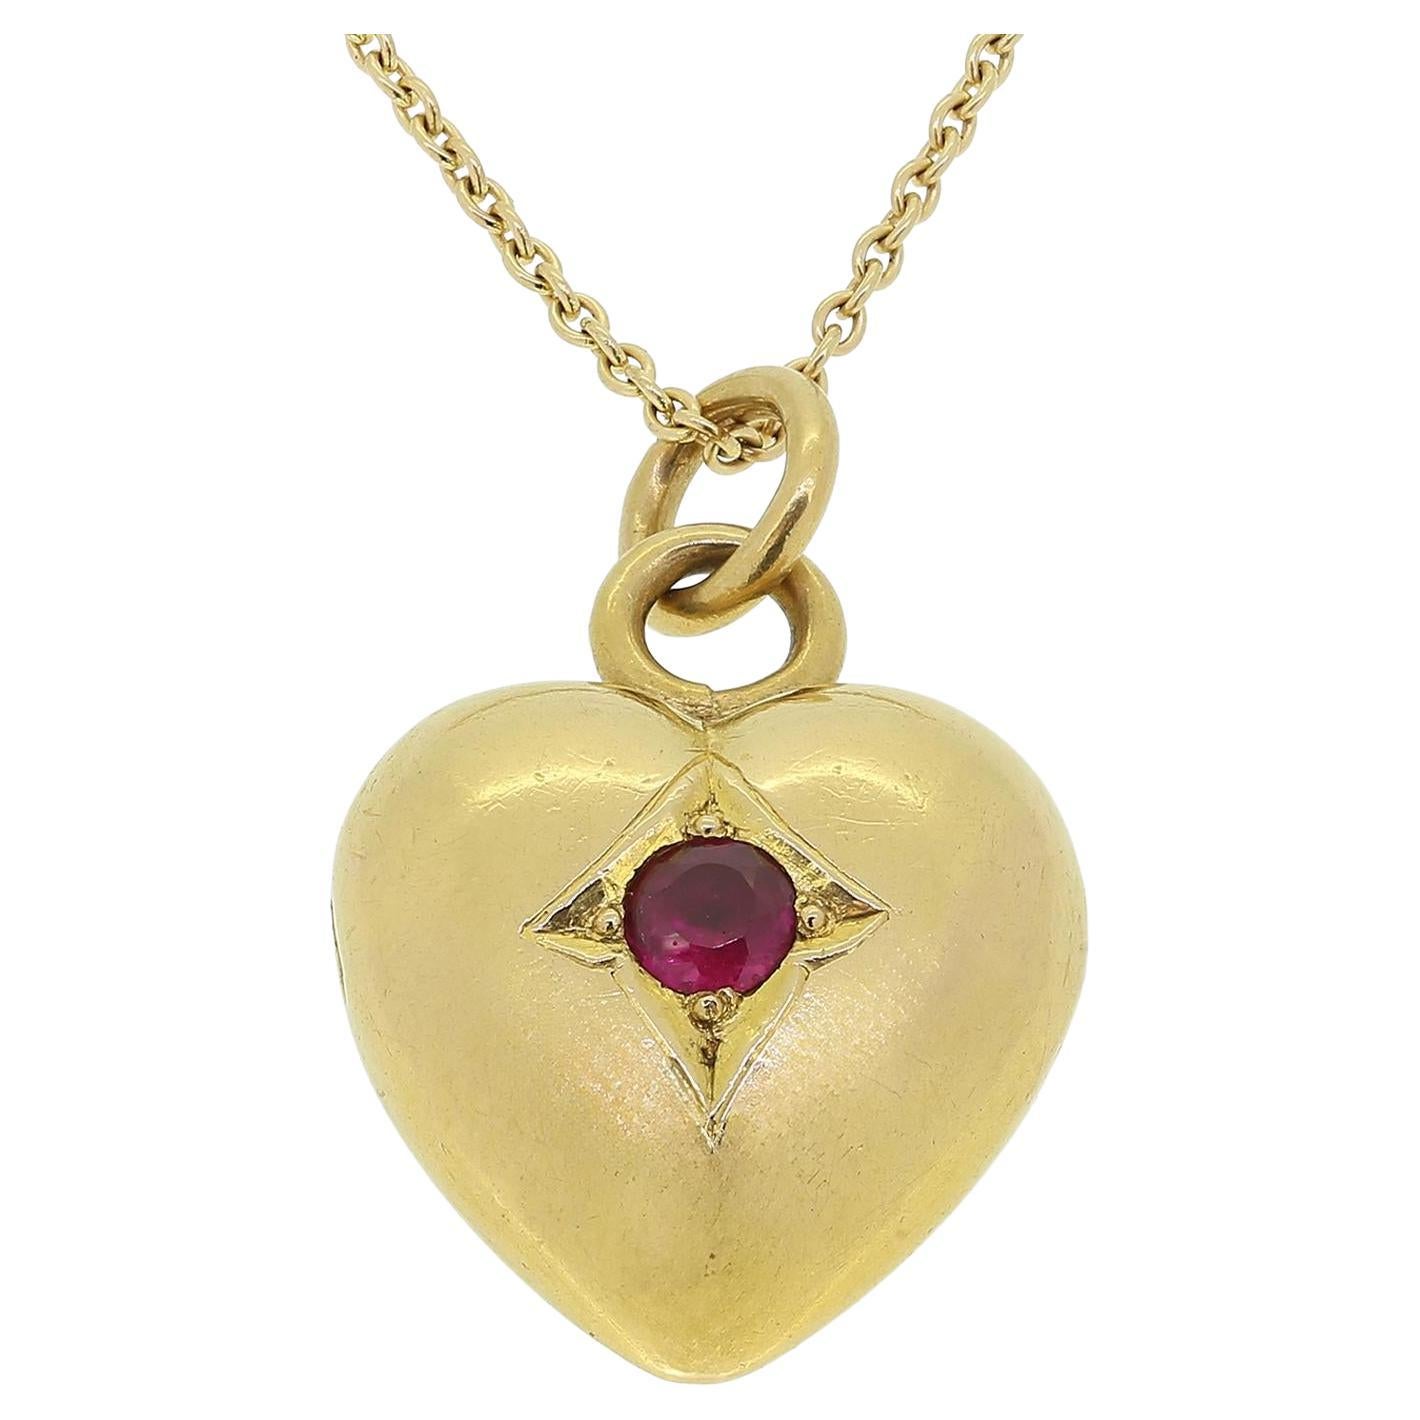 Collier victorien avec pendentif en forme de coeur en rubis